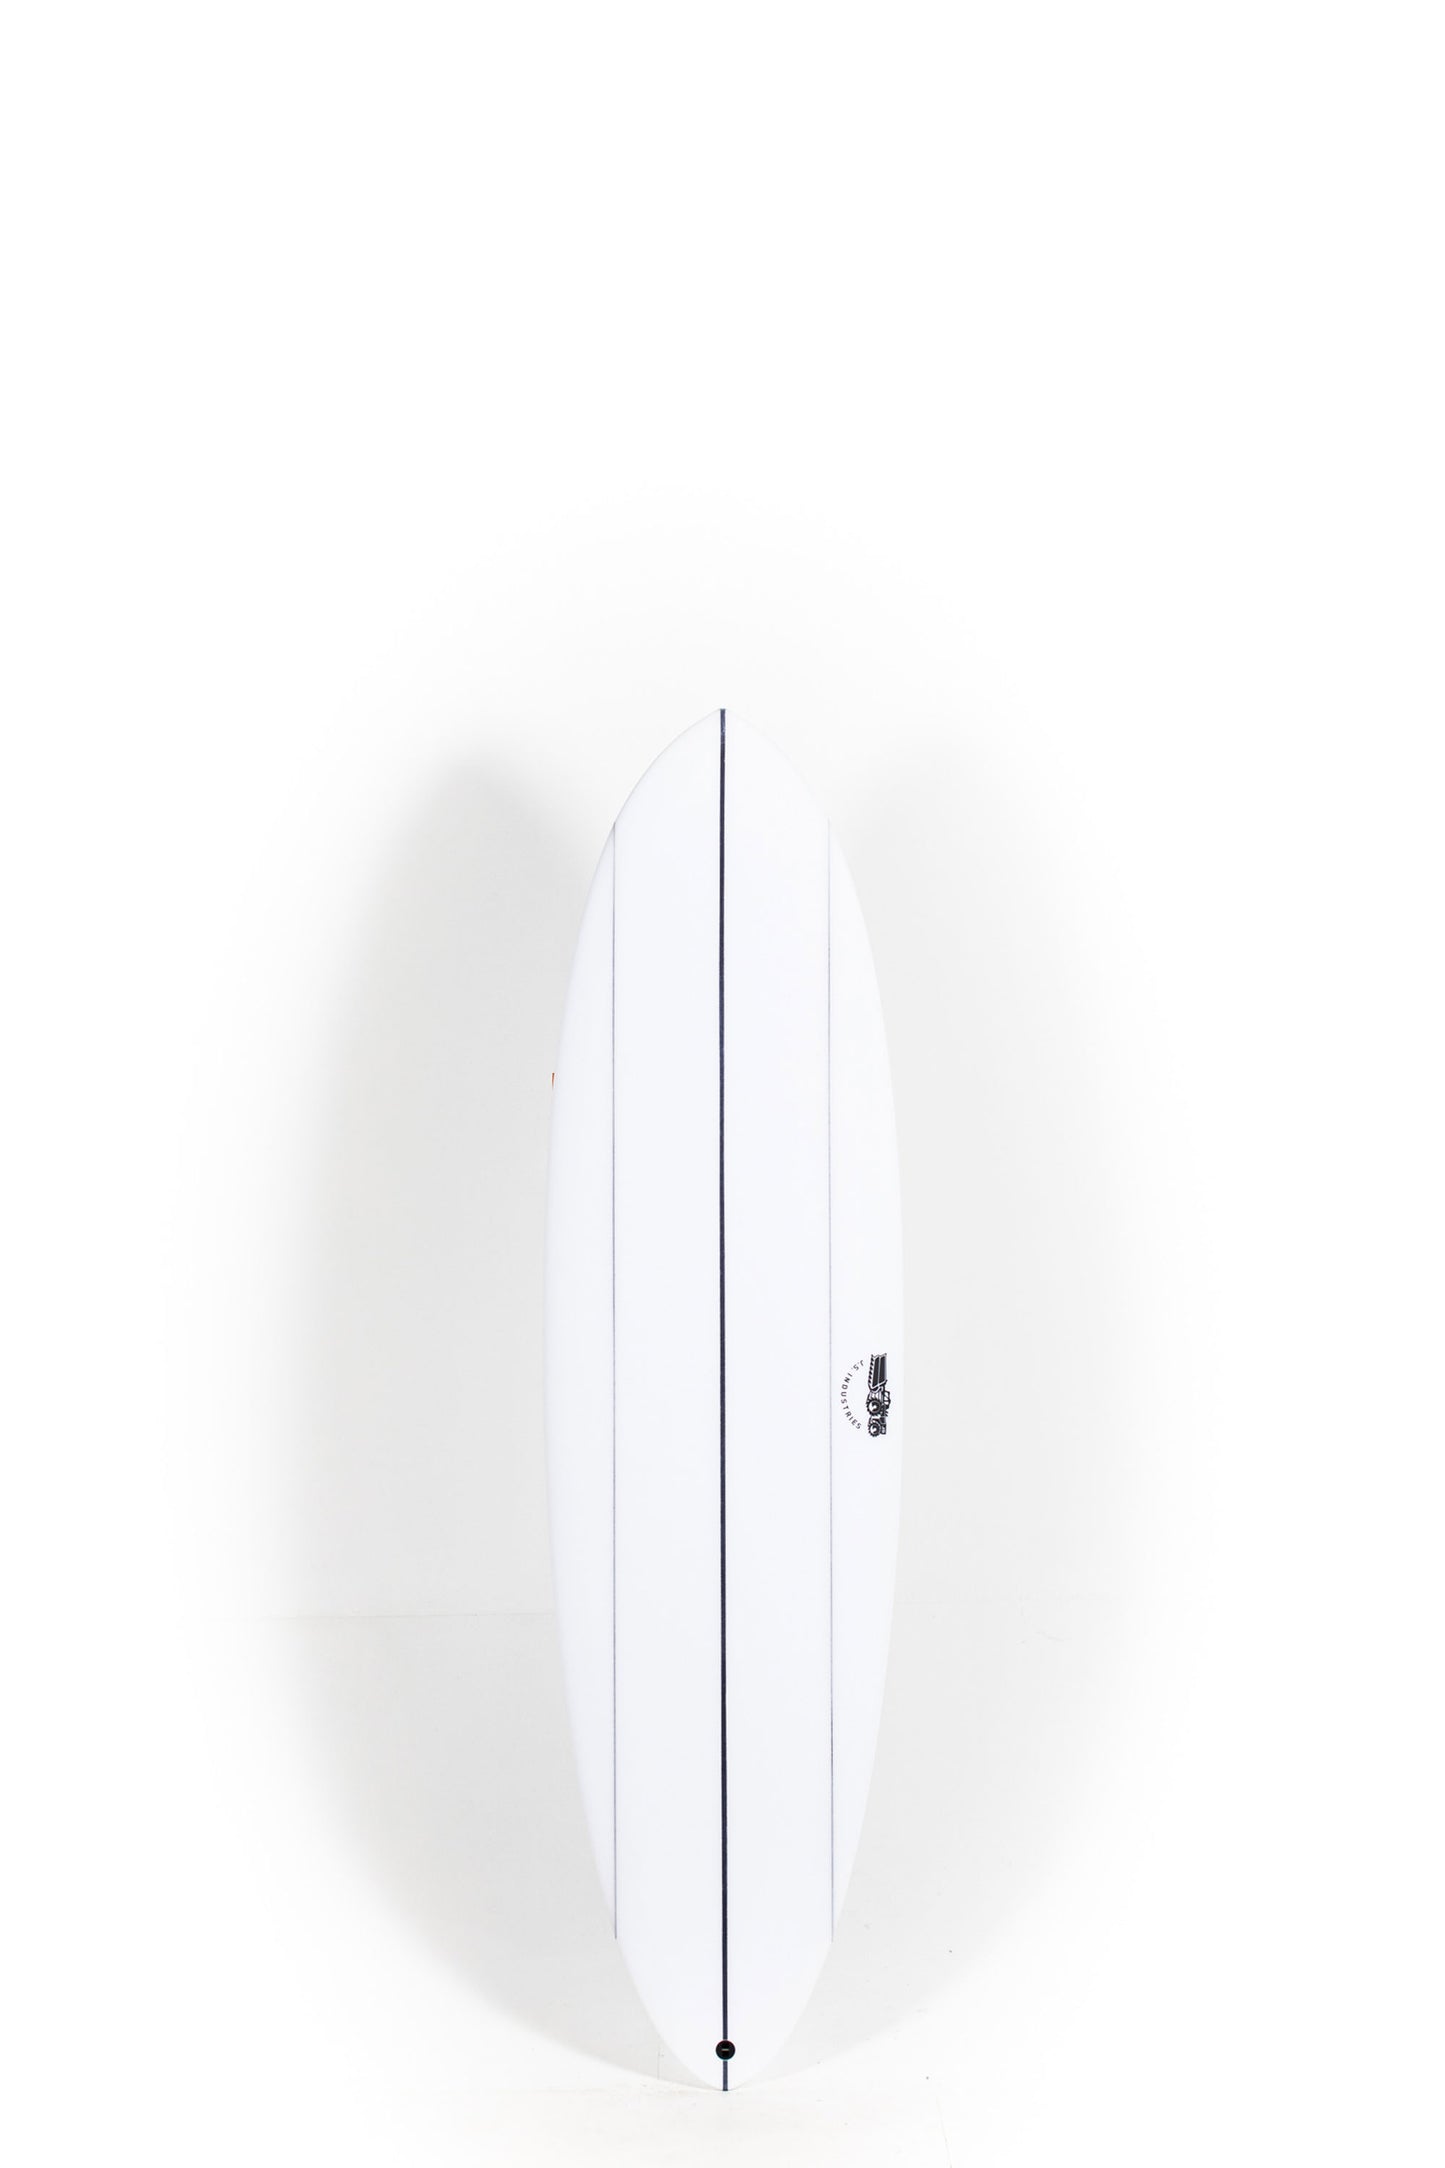 Pukas Surf Shop - JS Surfboards - BIG BARON - 6'0" x 19 x 2 3/8 x 29,5L. - BIGBARON600